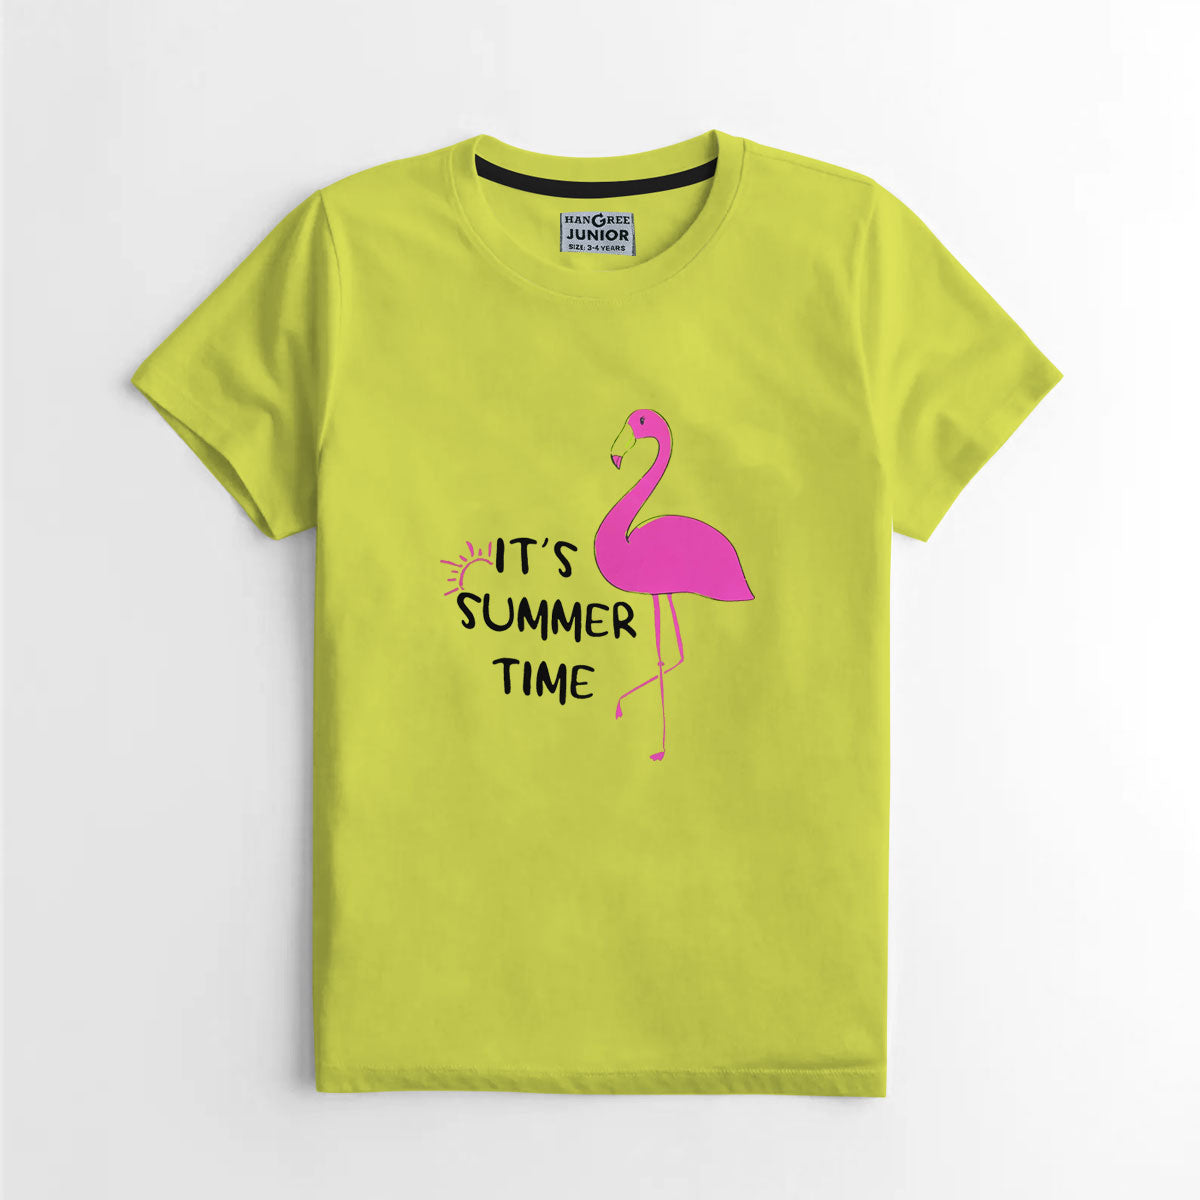 Cute Girl Printed Summer Tee Shirt